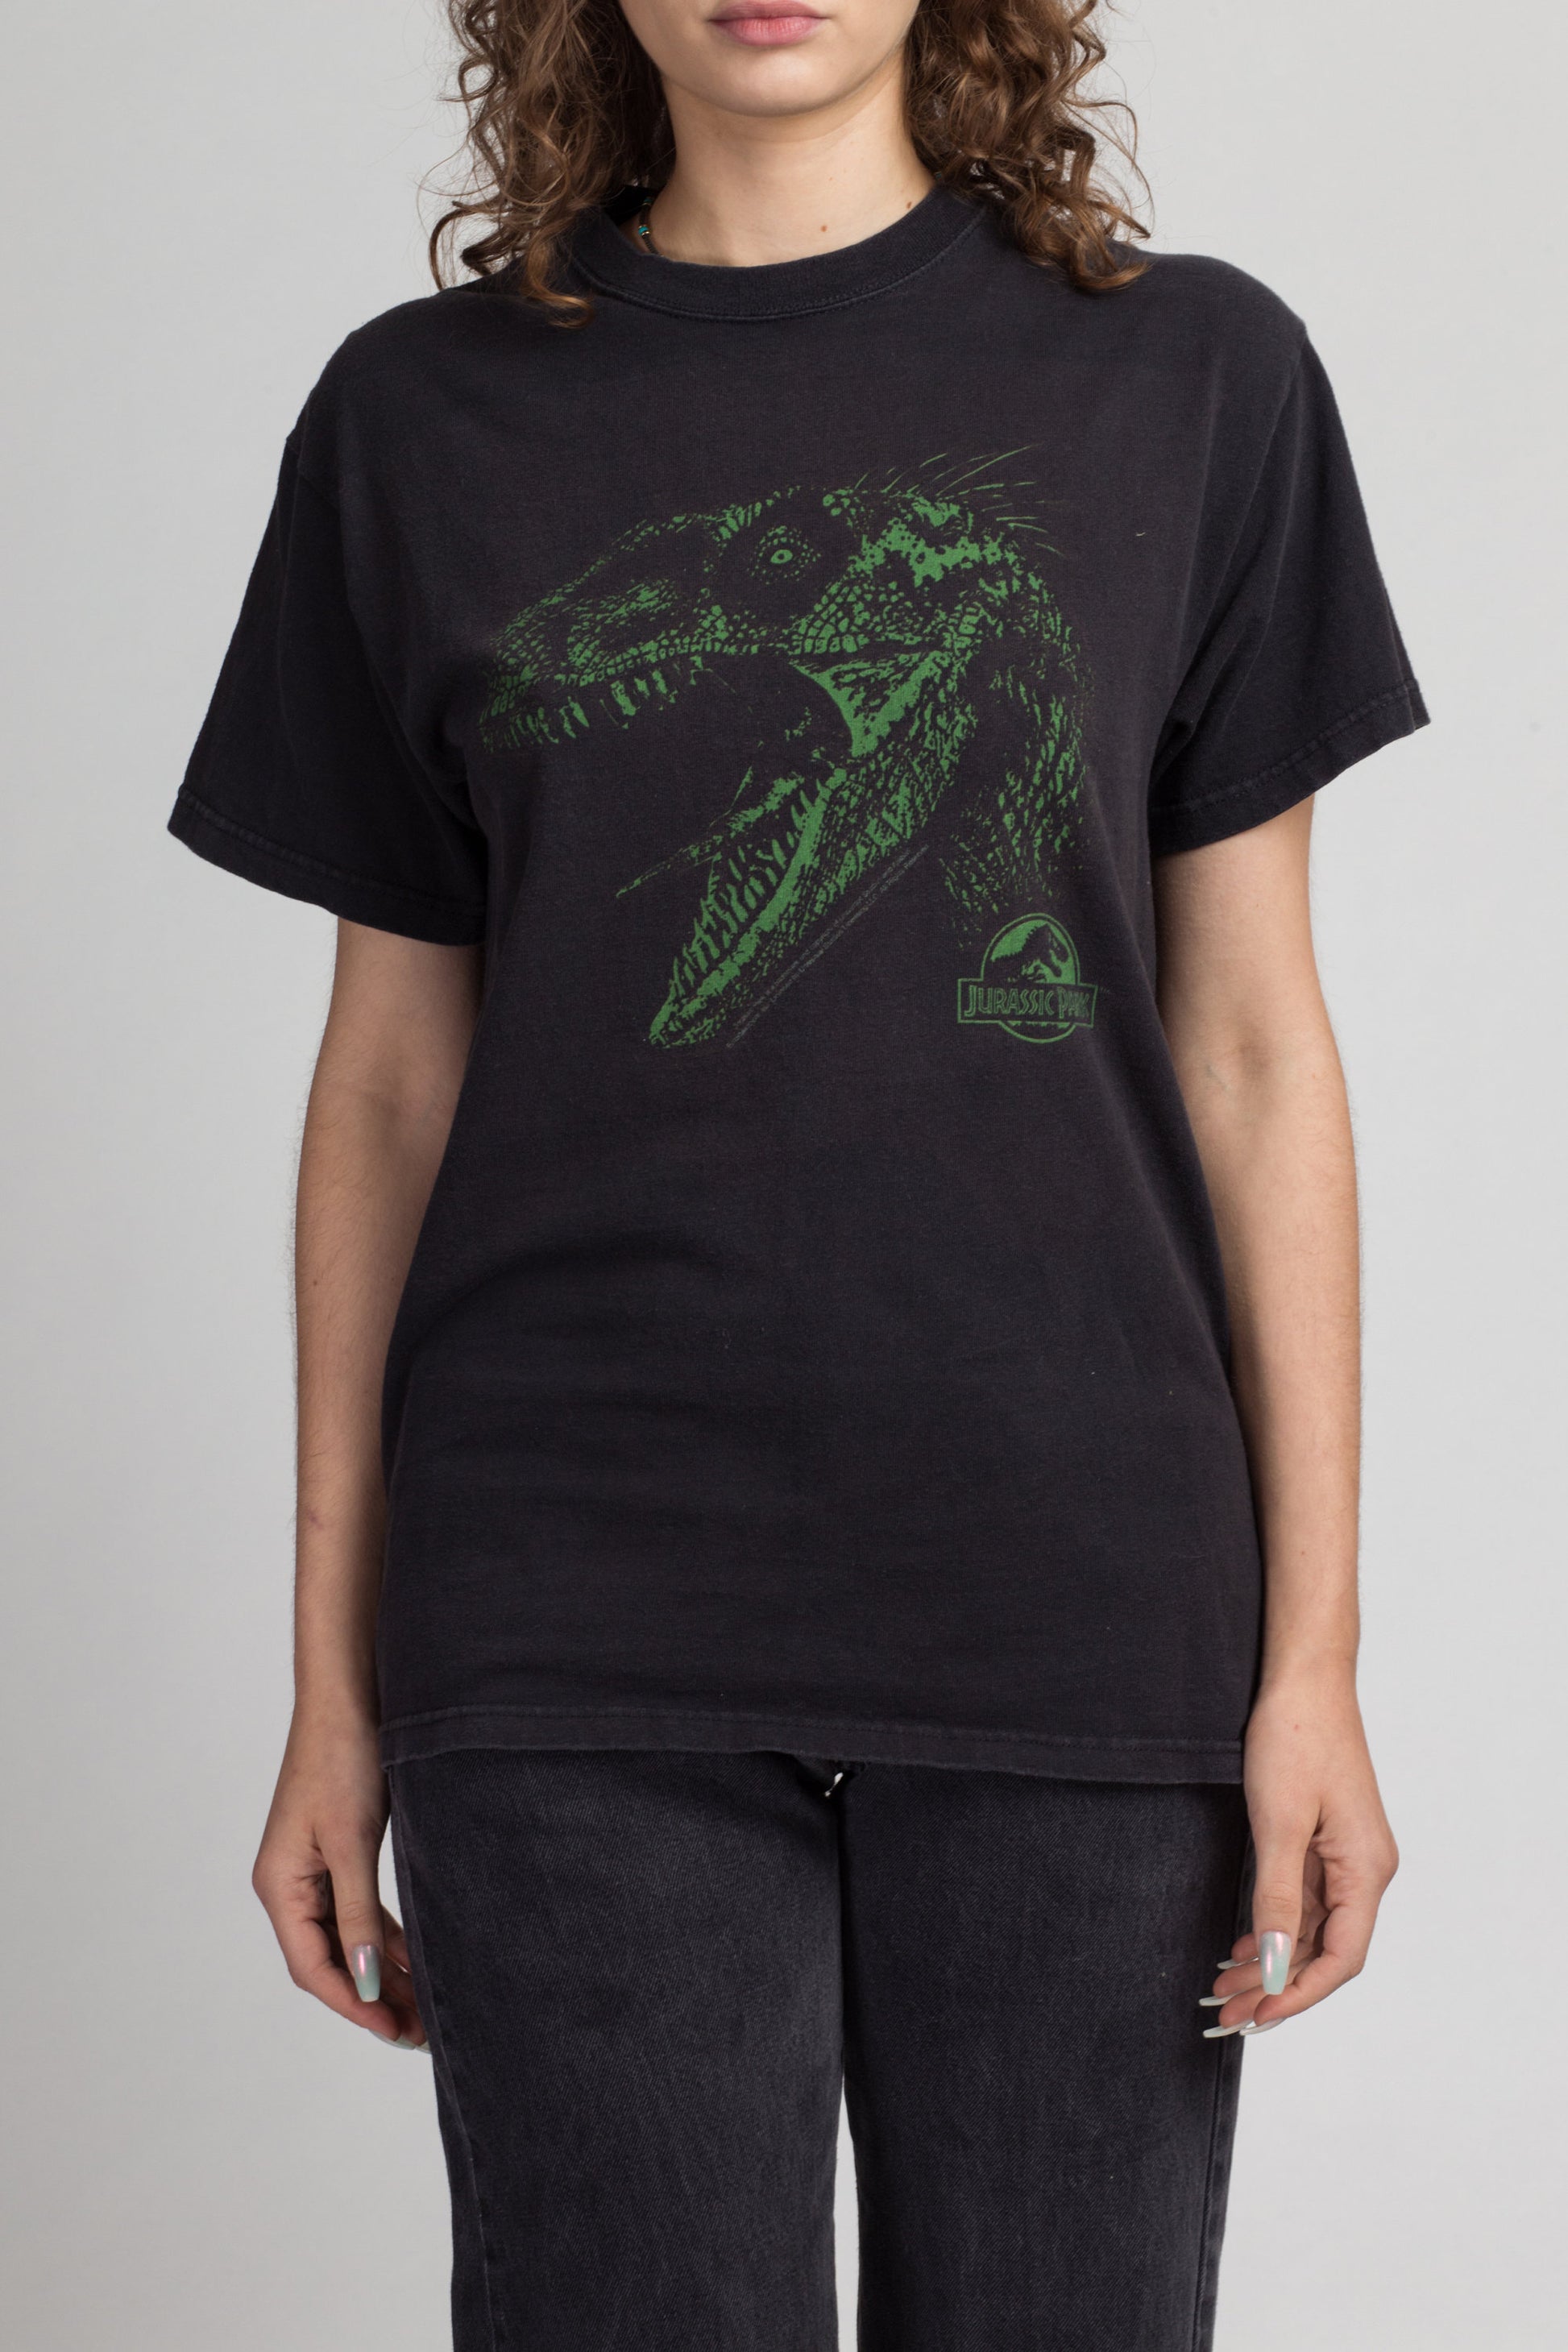 90s Jurassic Park T Shirt - Medium | Vintage Unisex Black Green Velociraptor Dinosaur Graphic Movie Tee